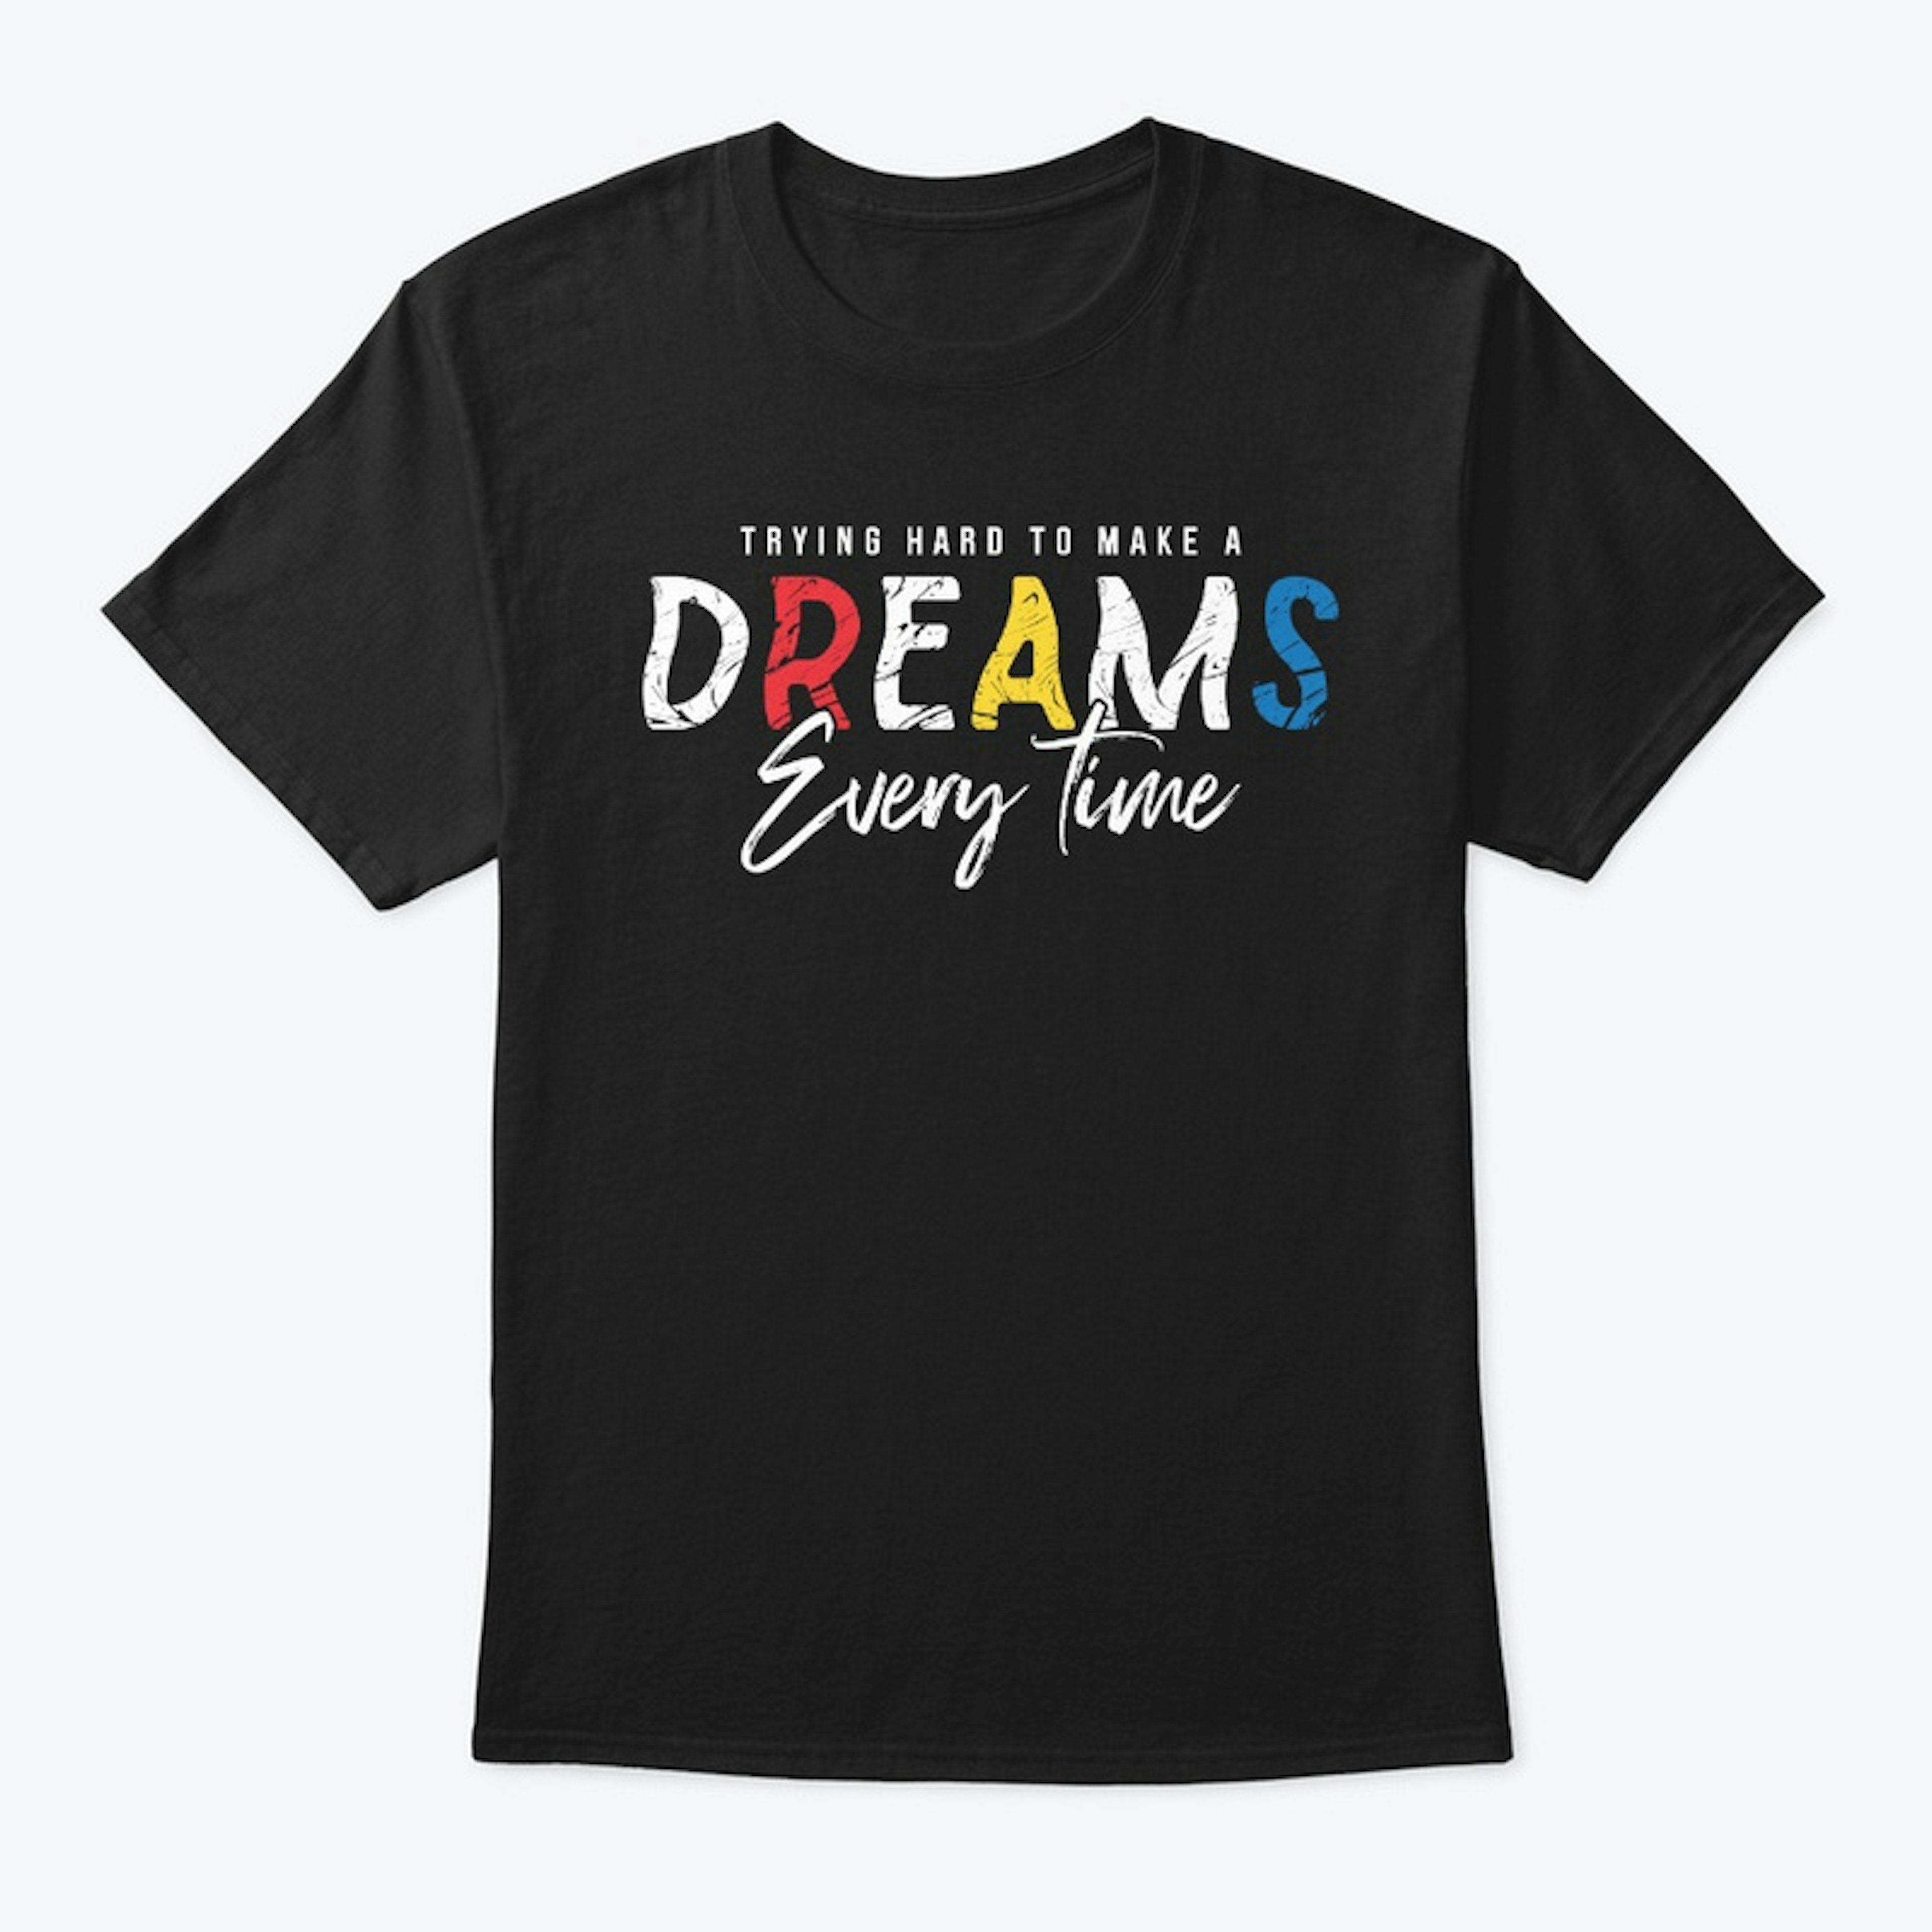 The Dreams Drinker's Lighter tshirt